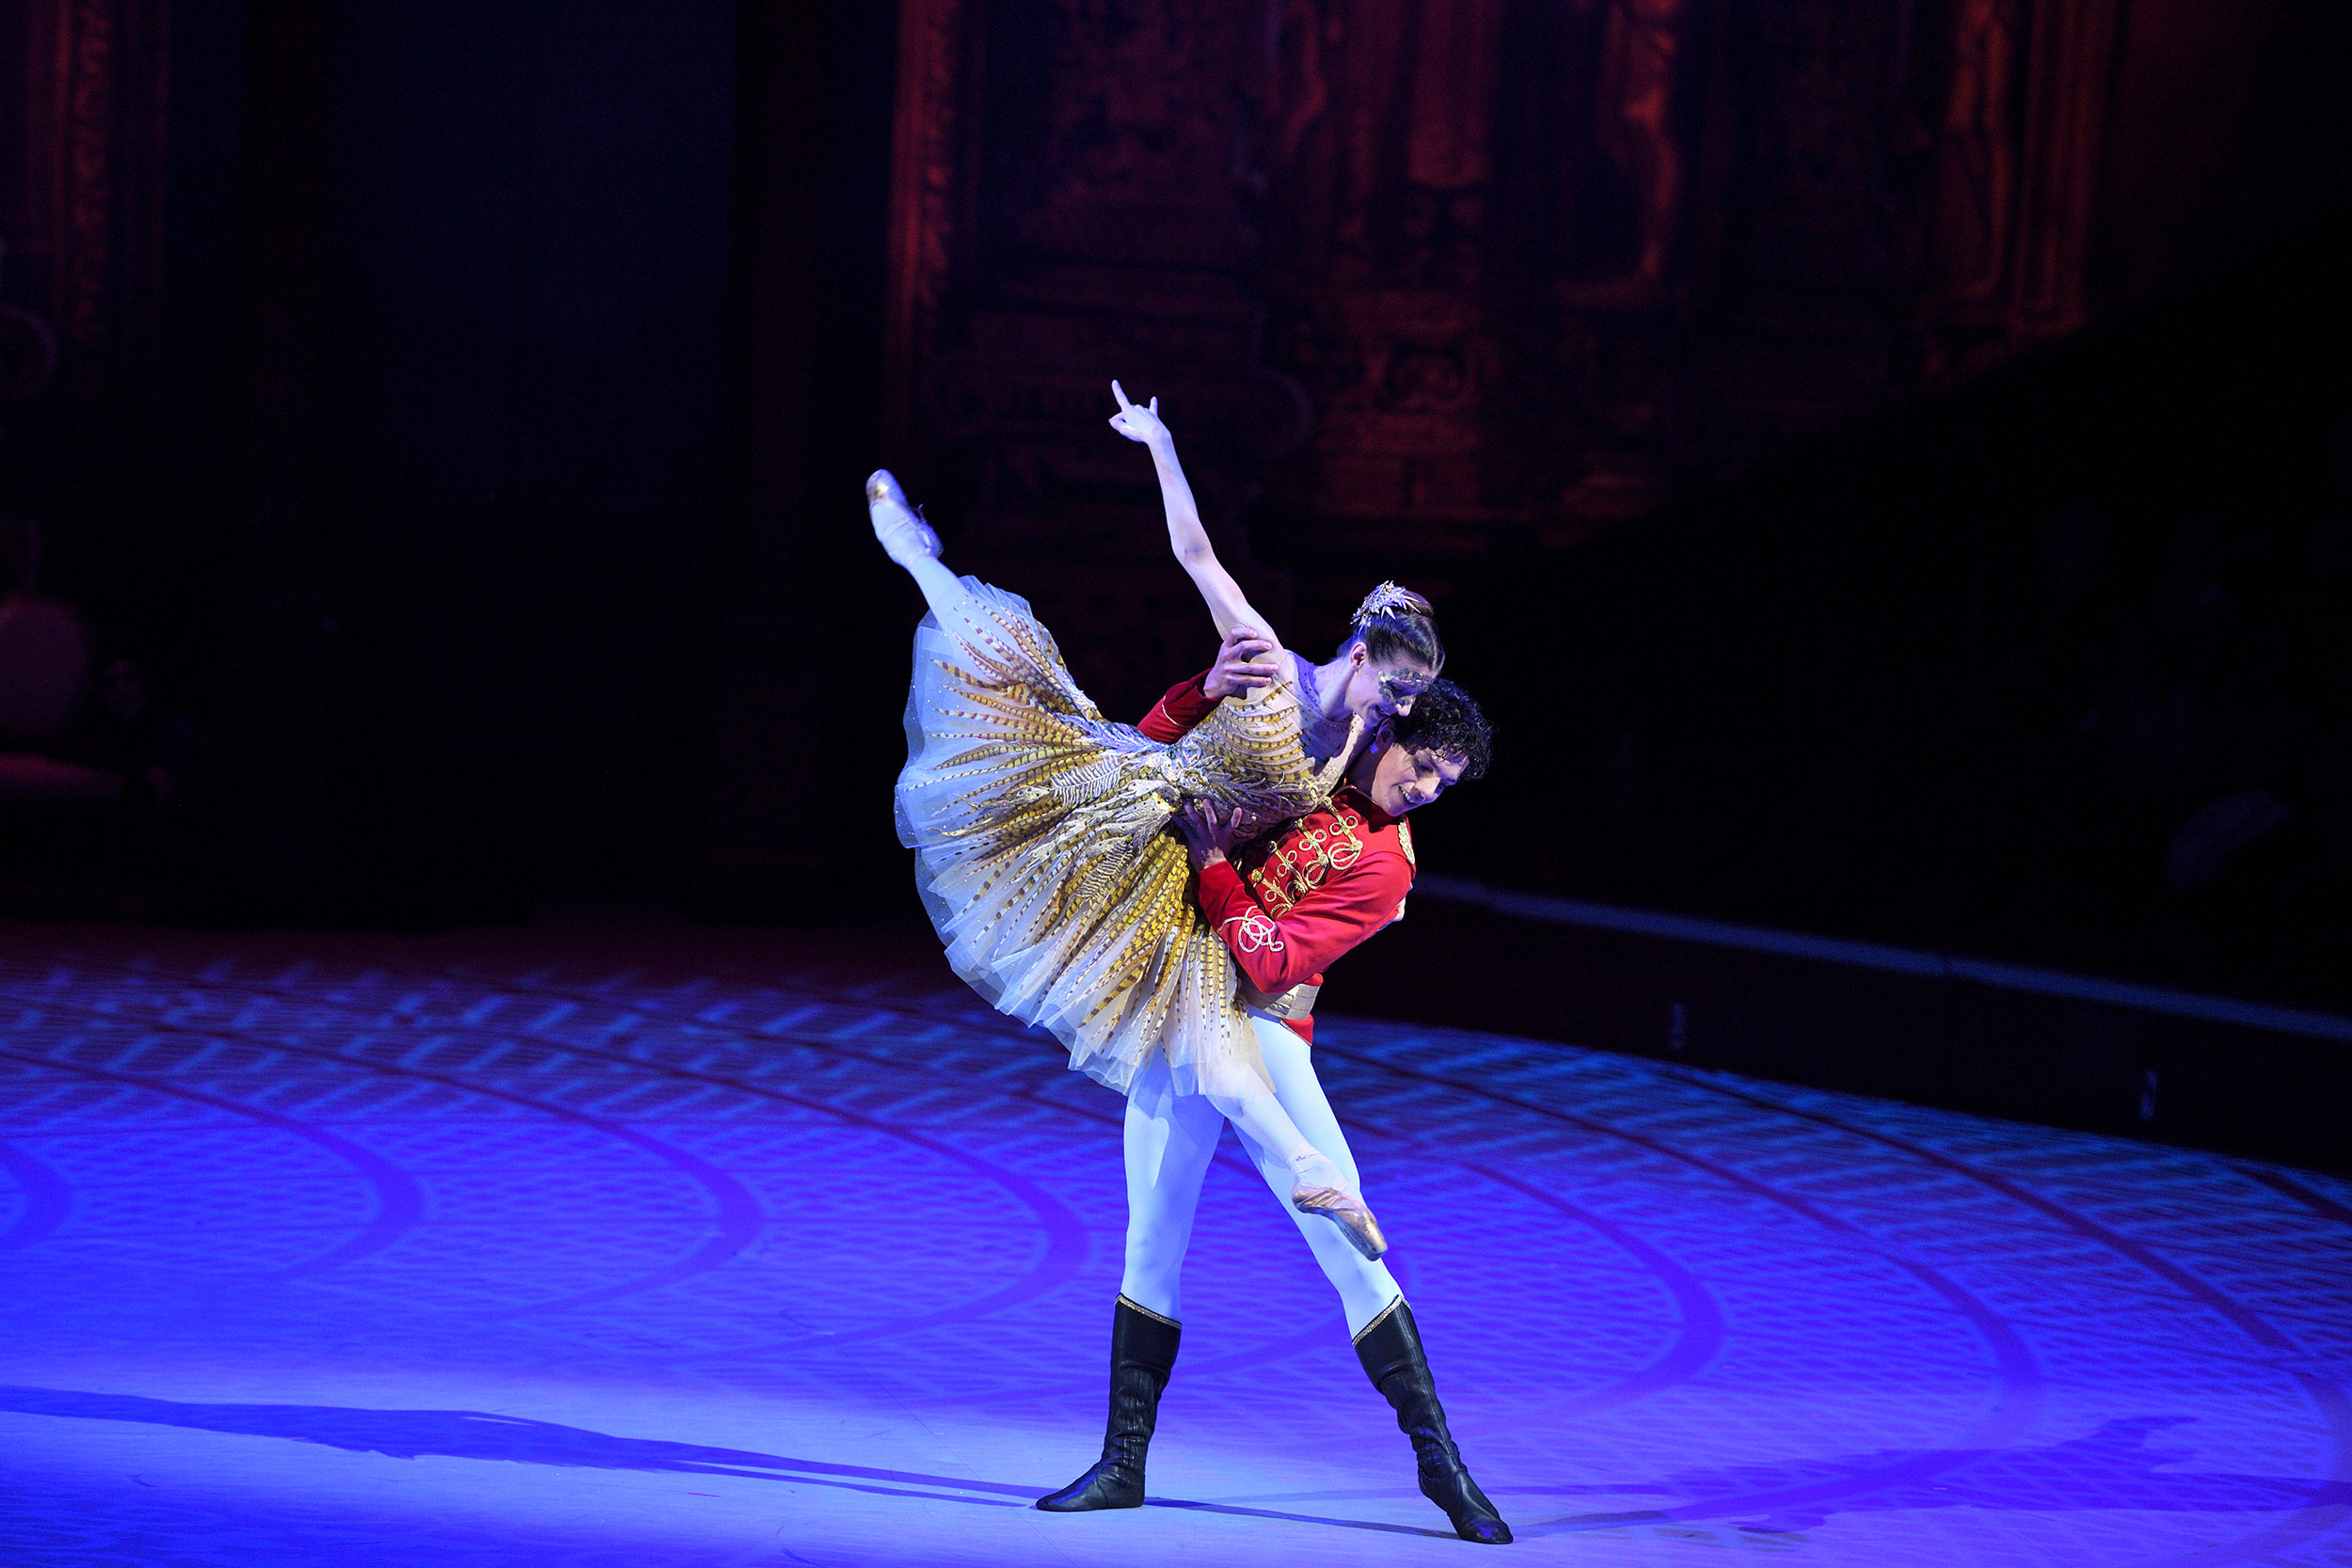 Cinderella in-the-round: Ballroom pas de deux (extract) | English National Ballet